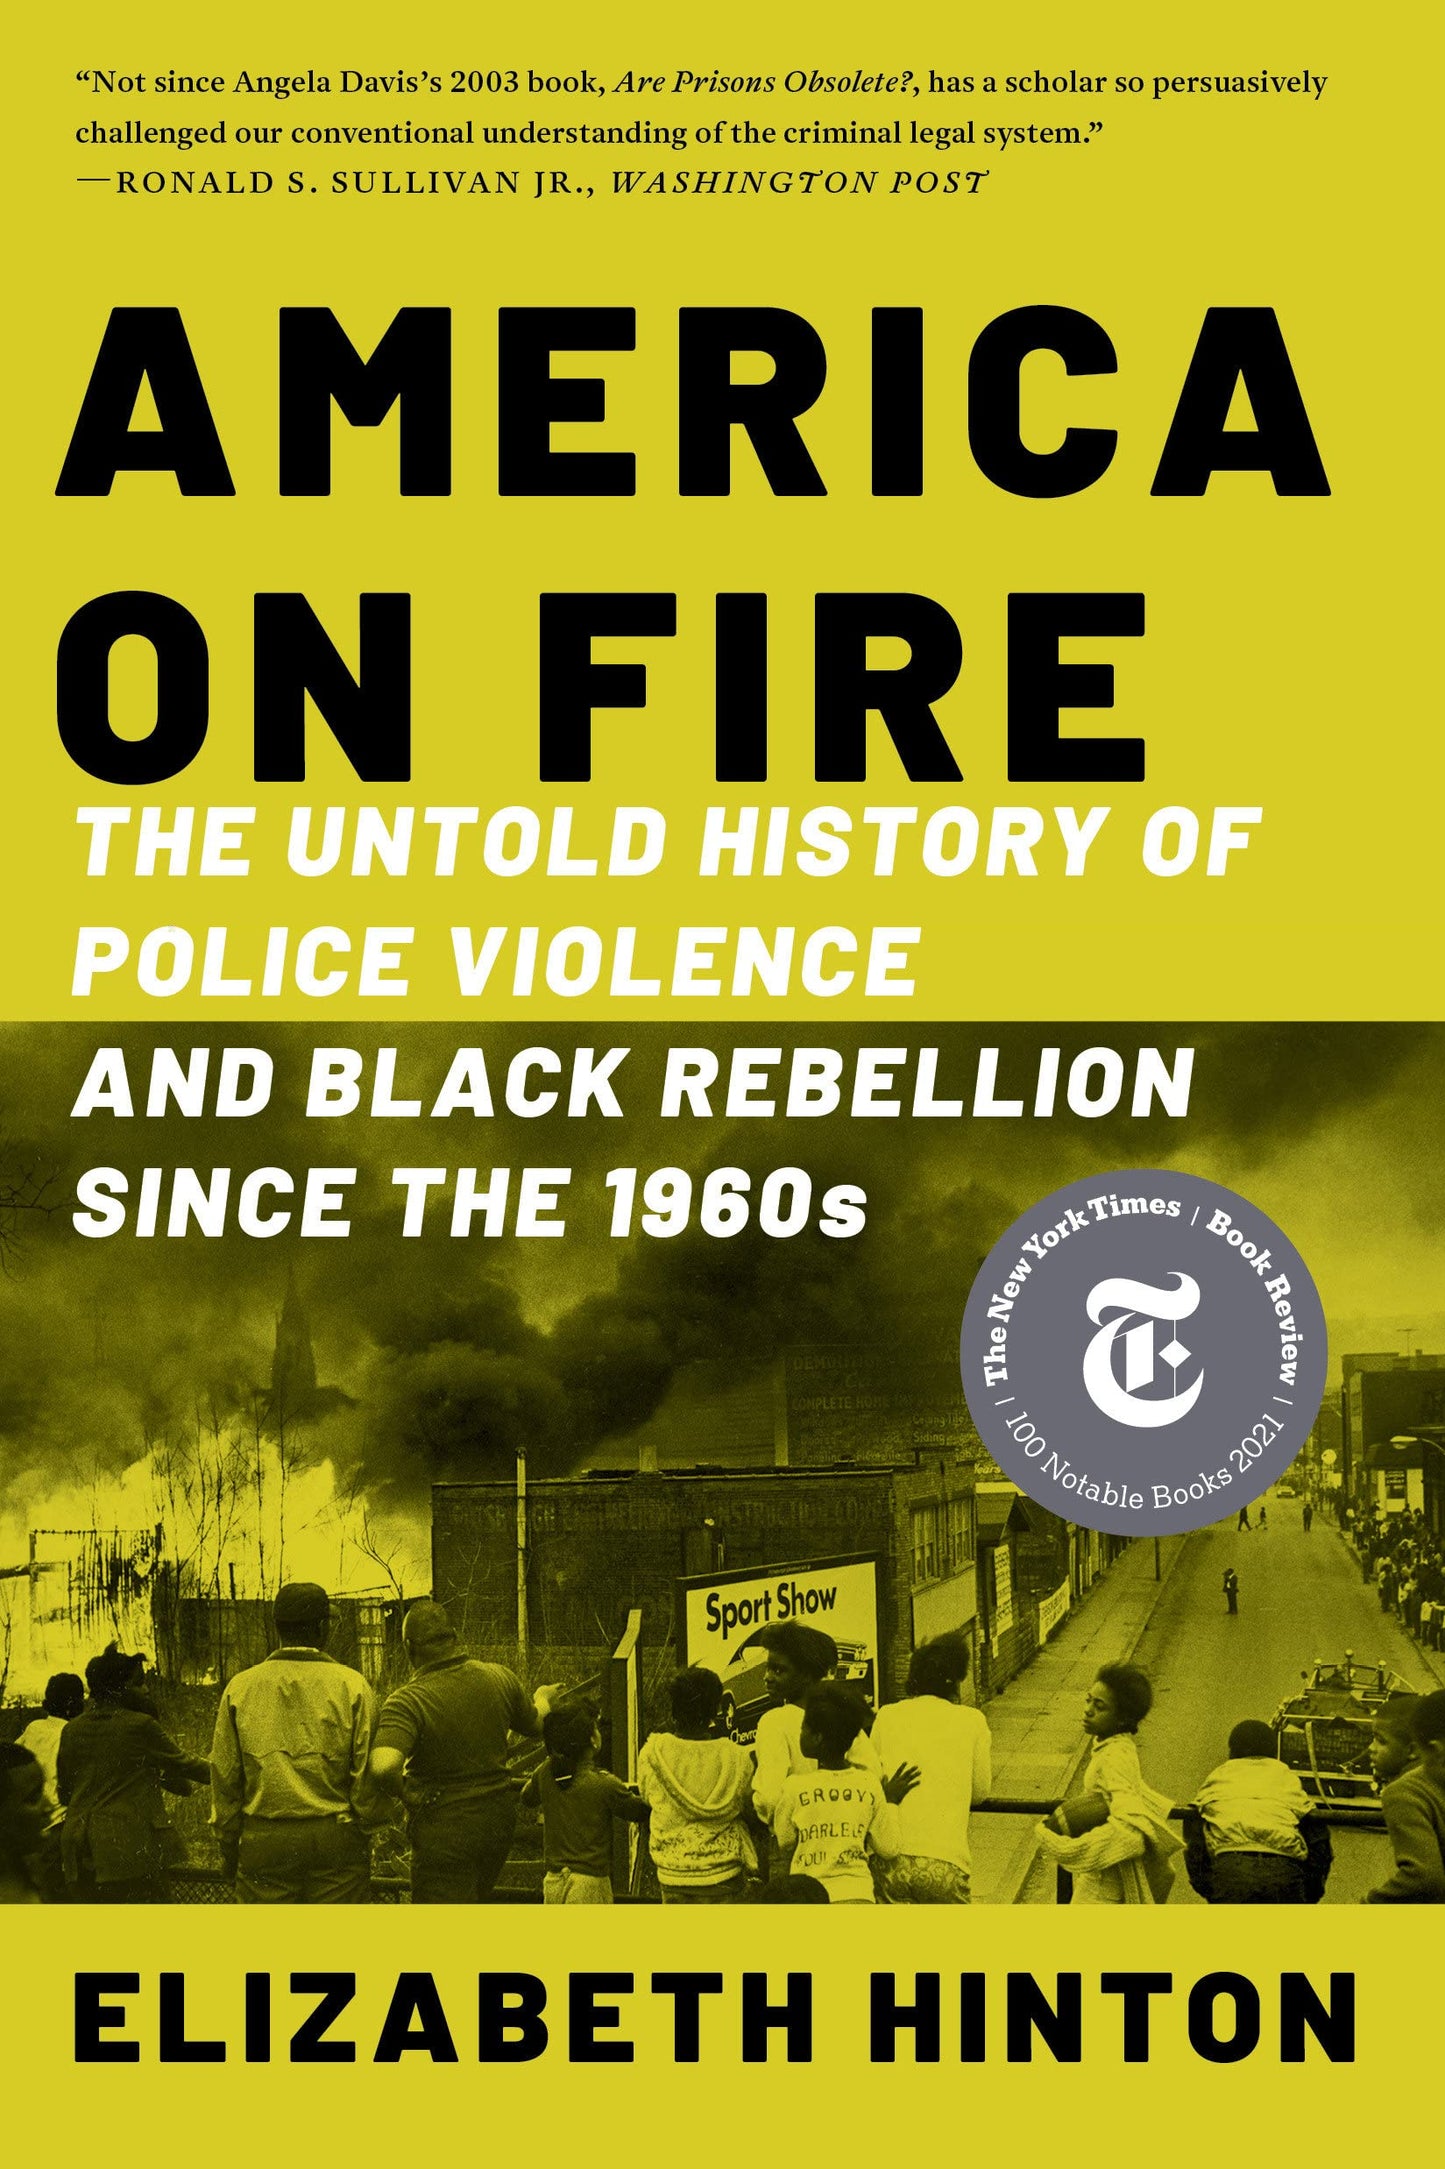 America on Fire, by Elizabeth Hinton